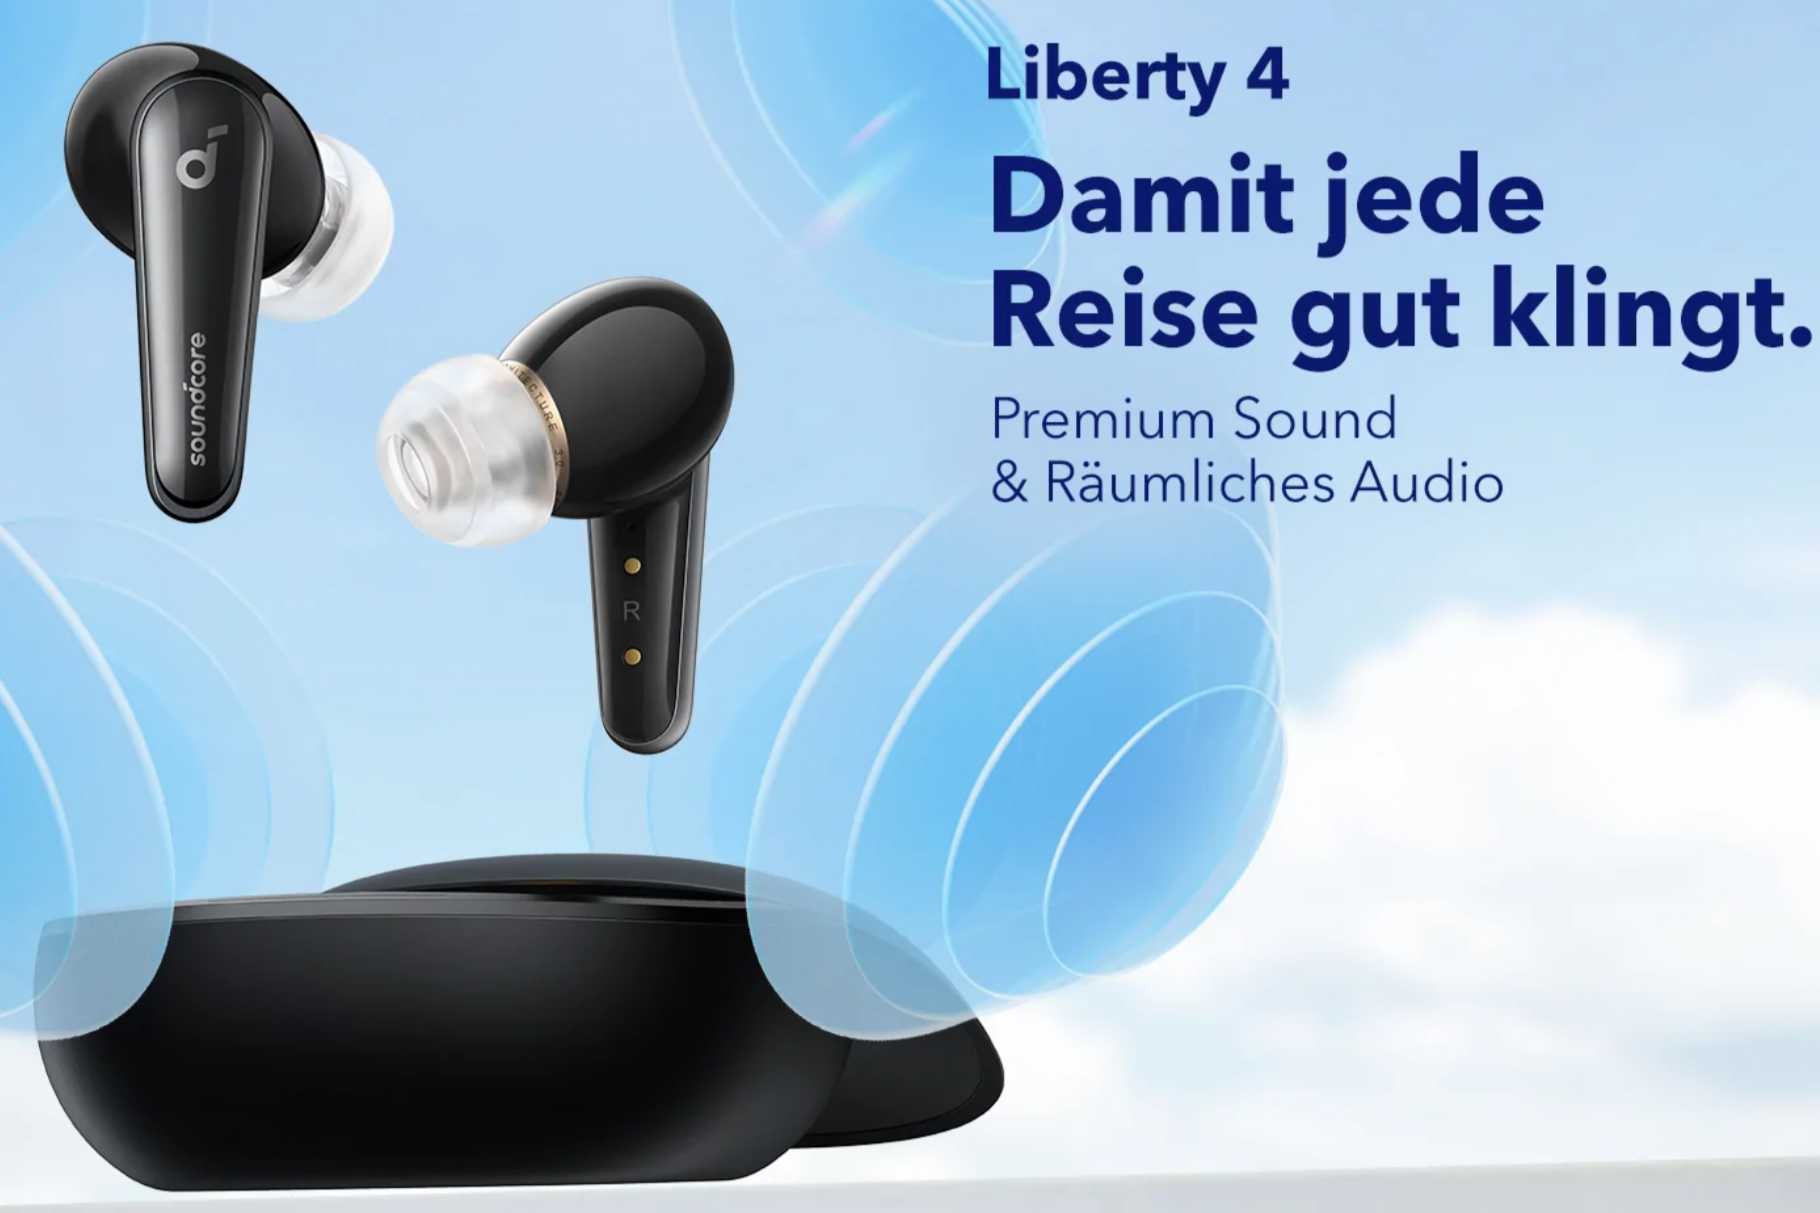 Soundcore-Liberty-4-vorgestellt-klangstark-mit-Spatial-Audio-LDAC